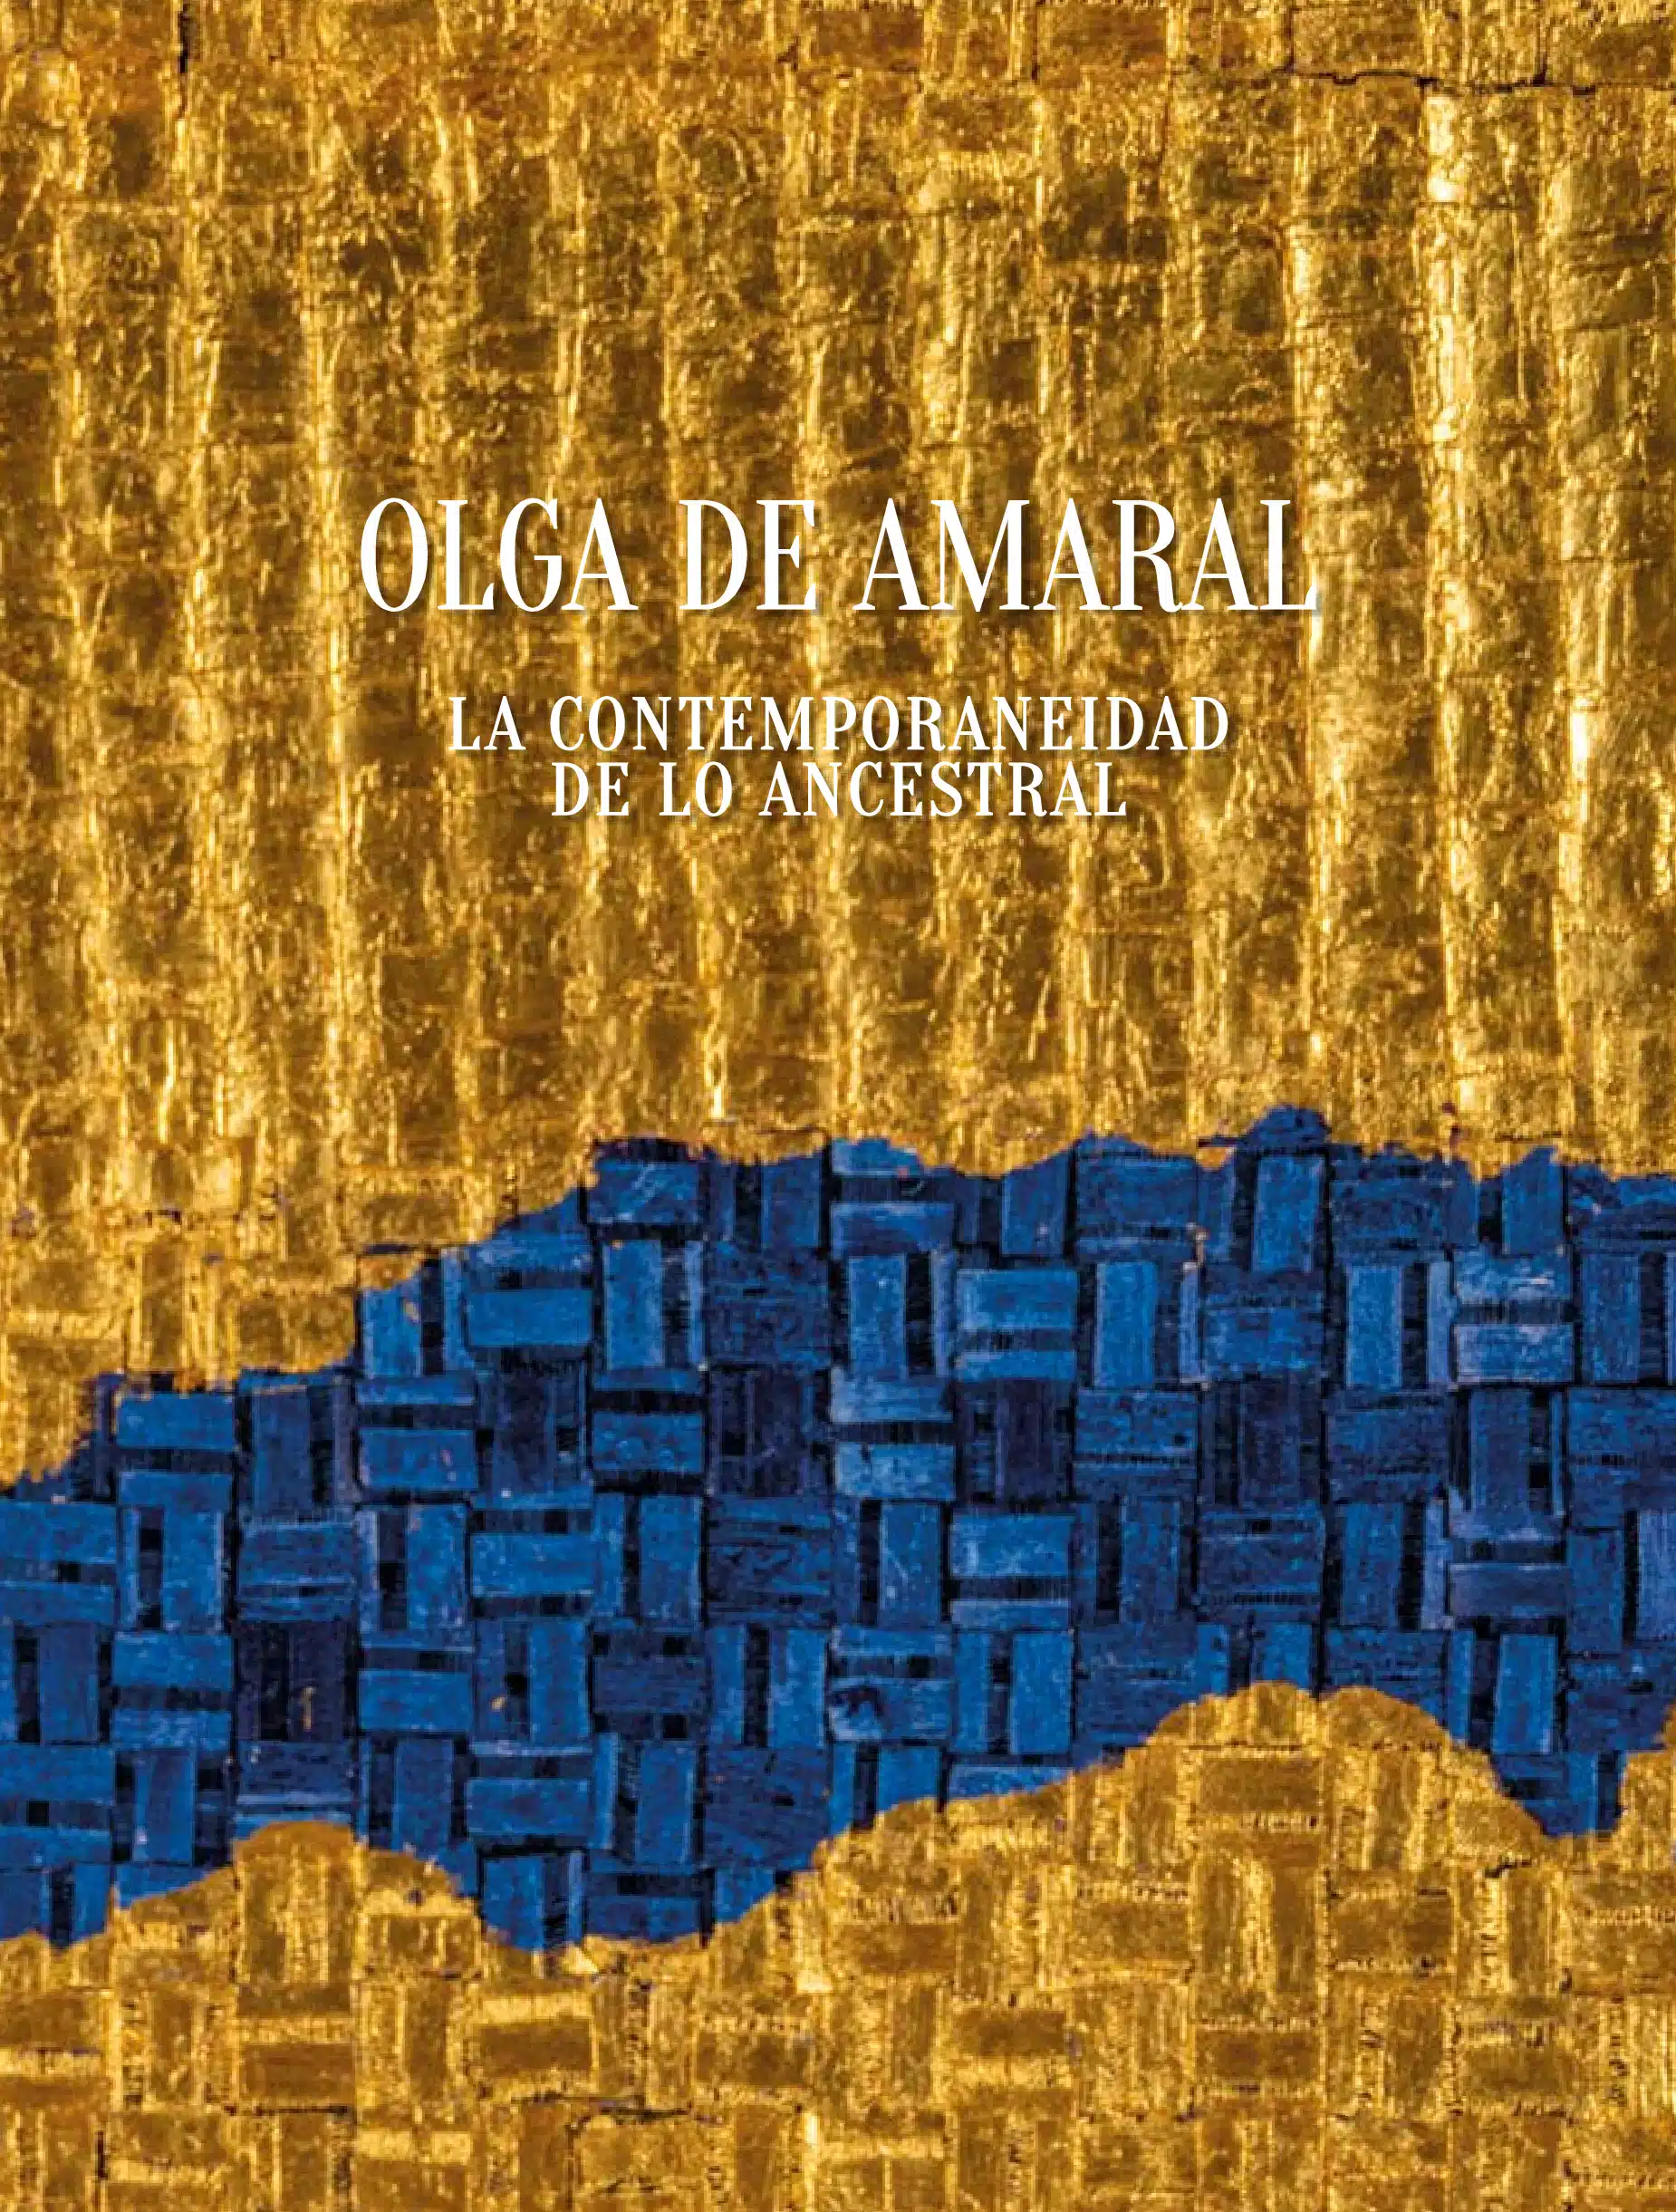 Olga de Amaral